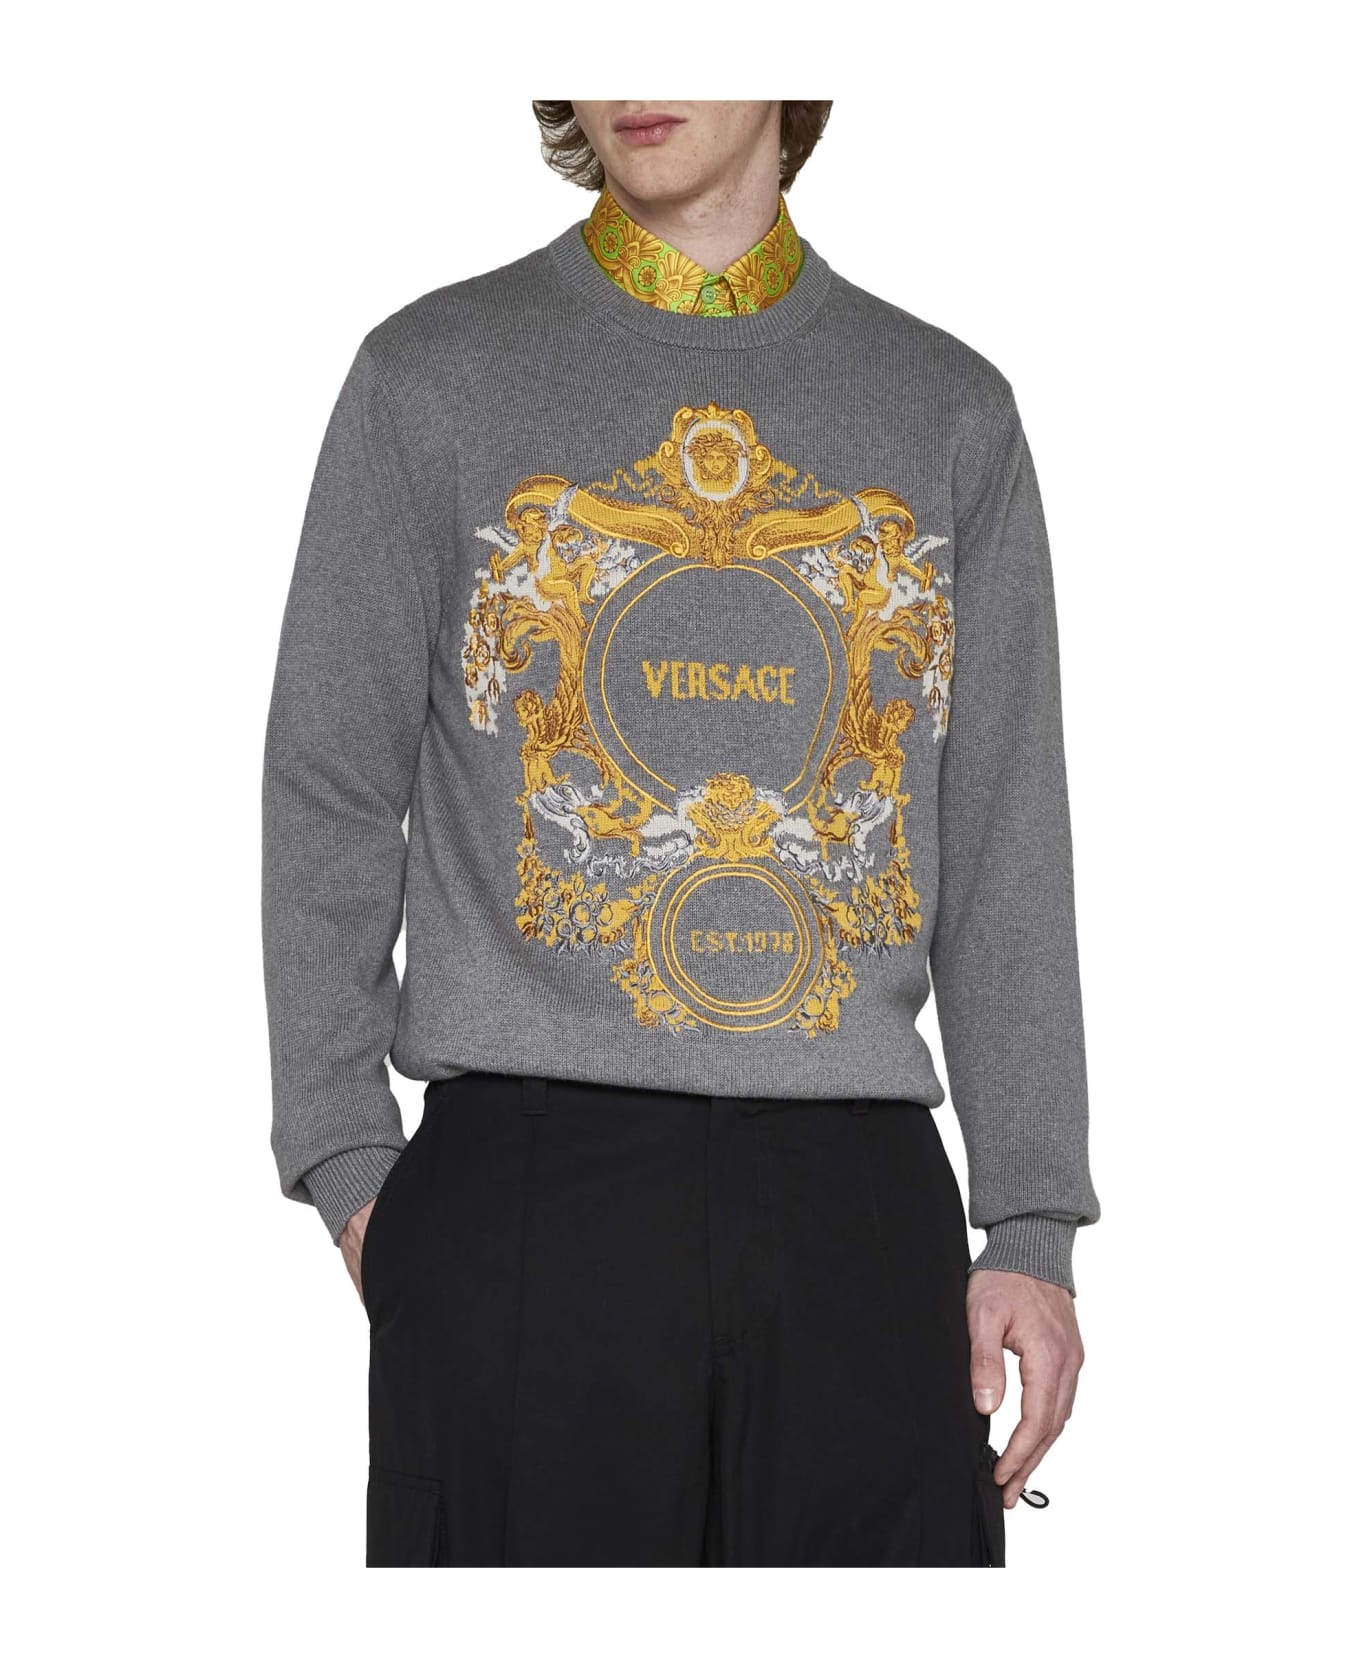 Versace Sweater - Grigio medio melange